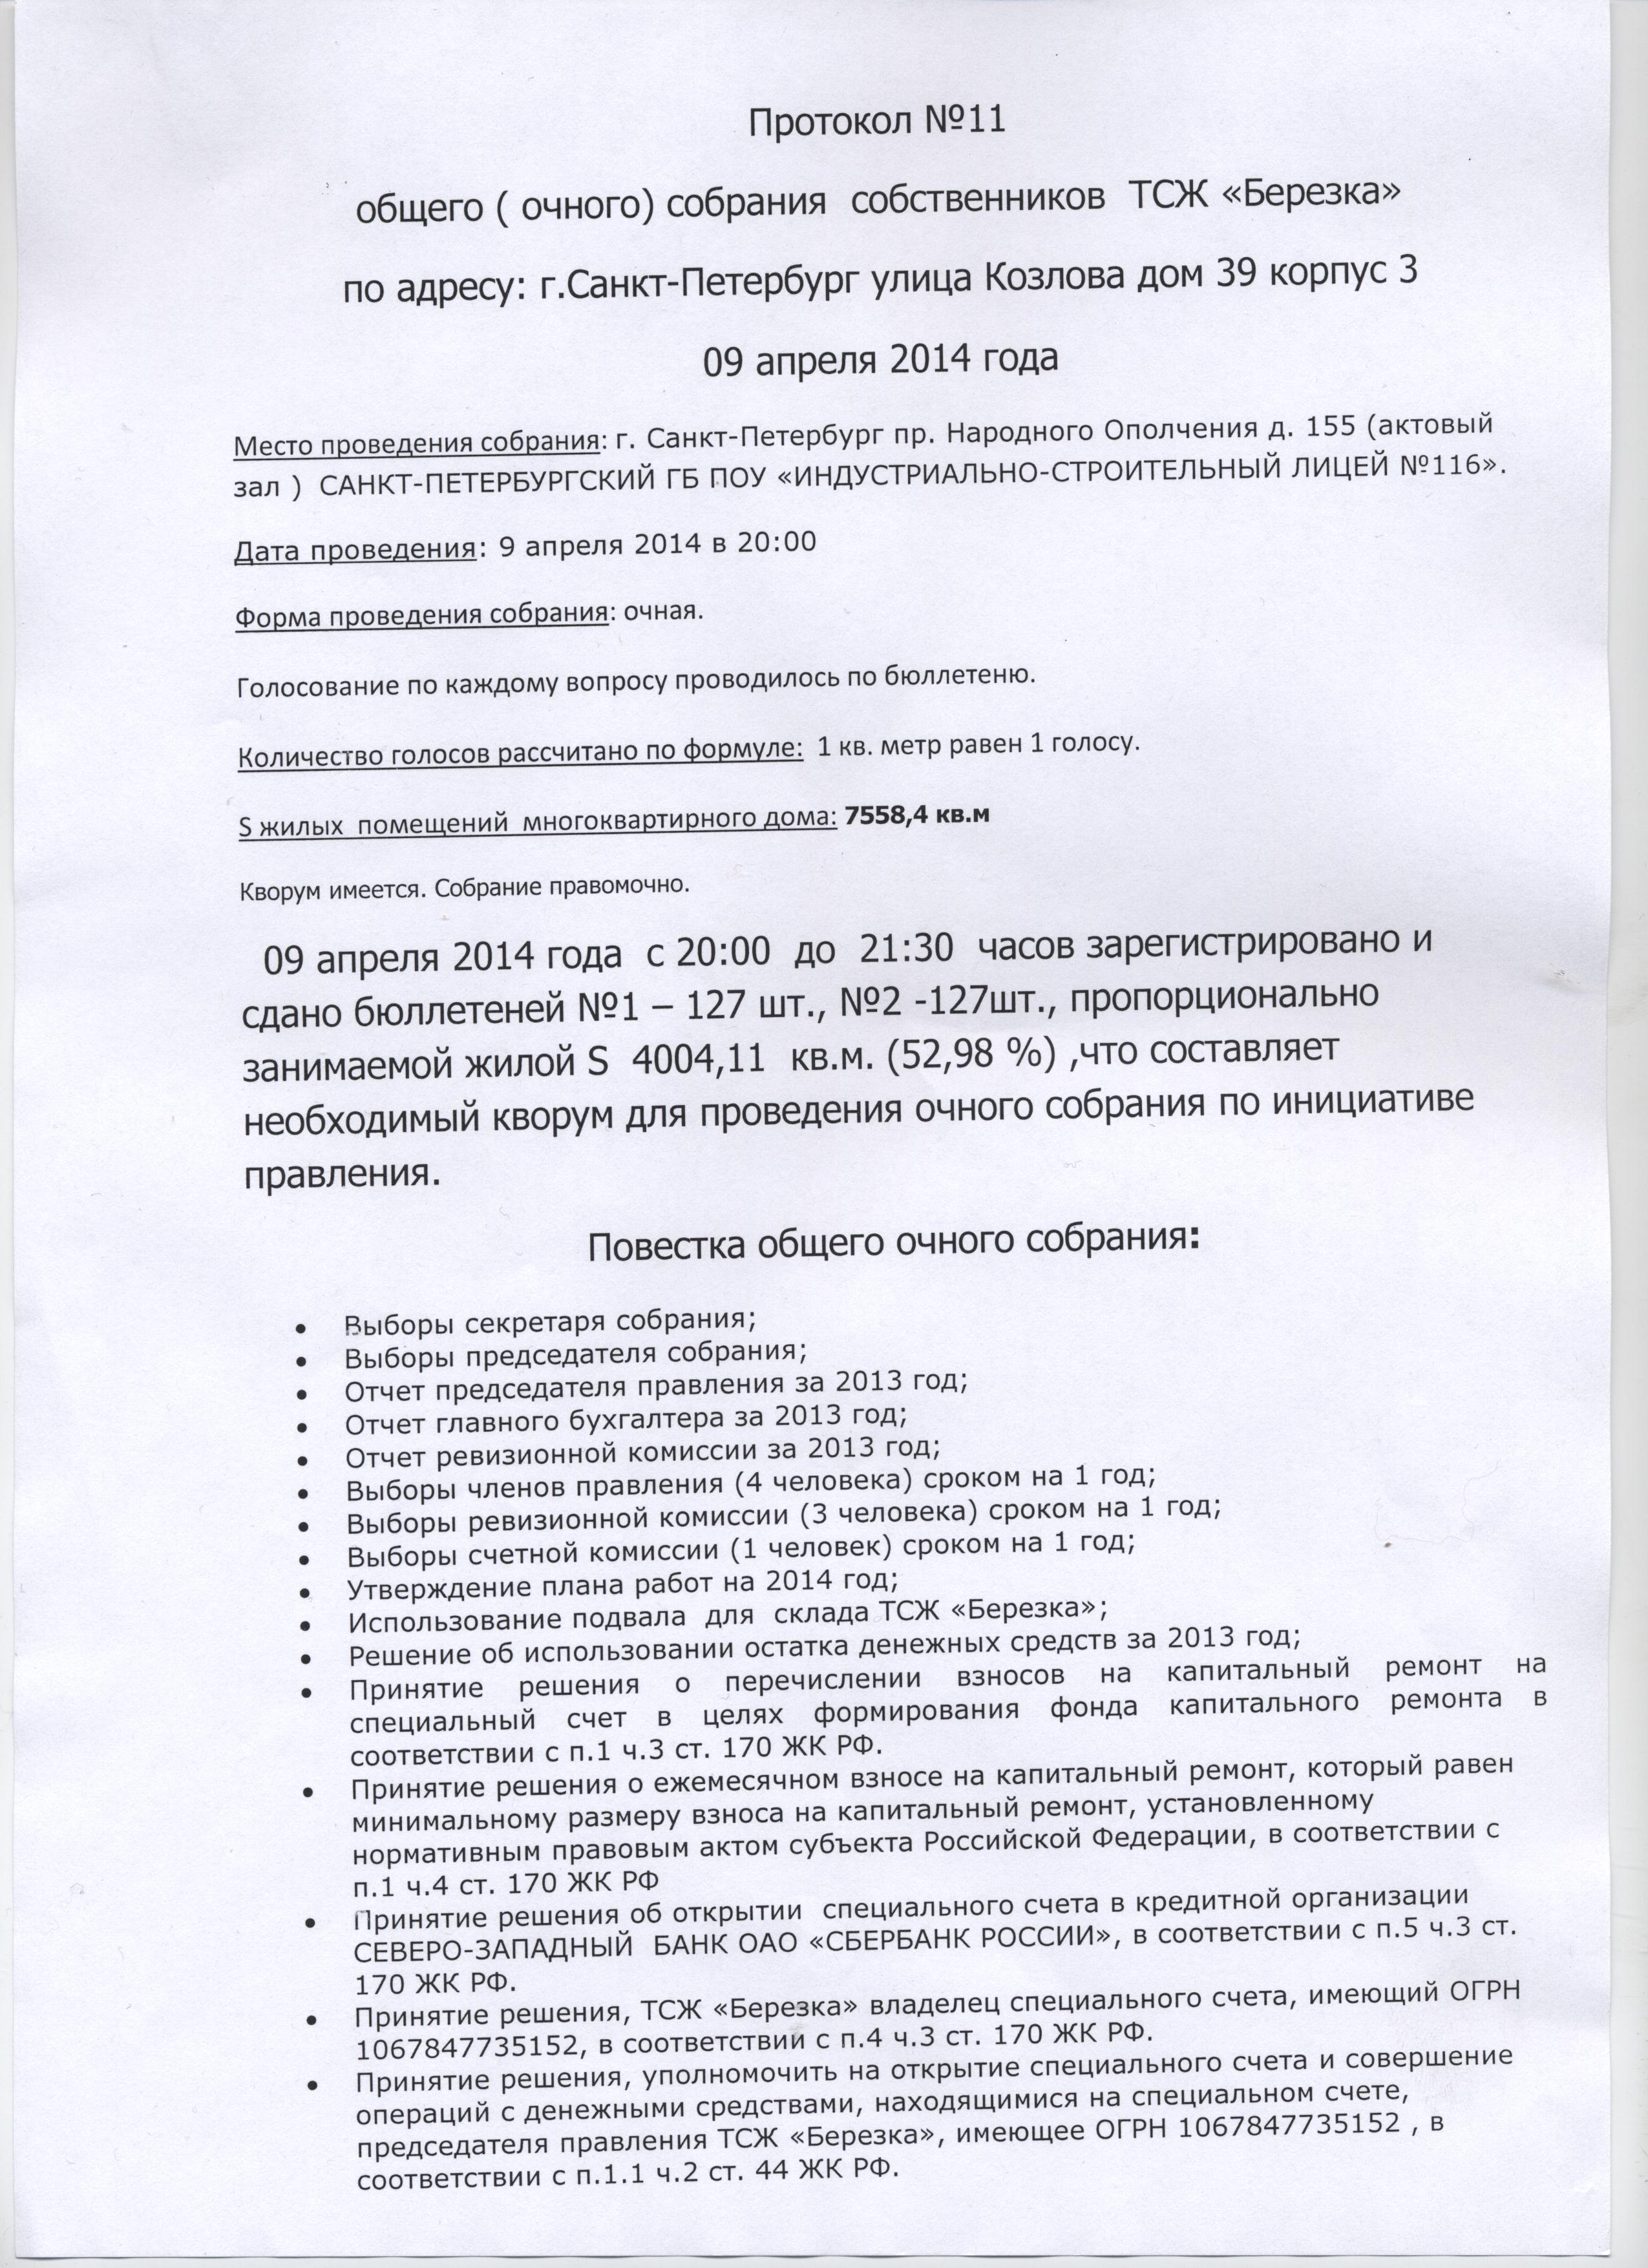 протокол общего собрания №11 от 09.04.2014 001